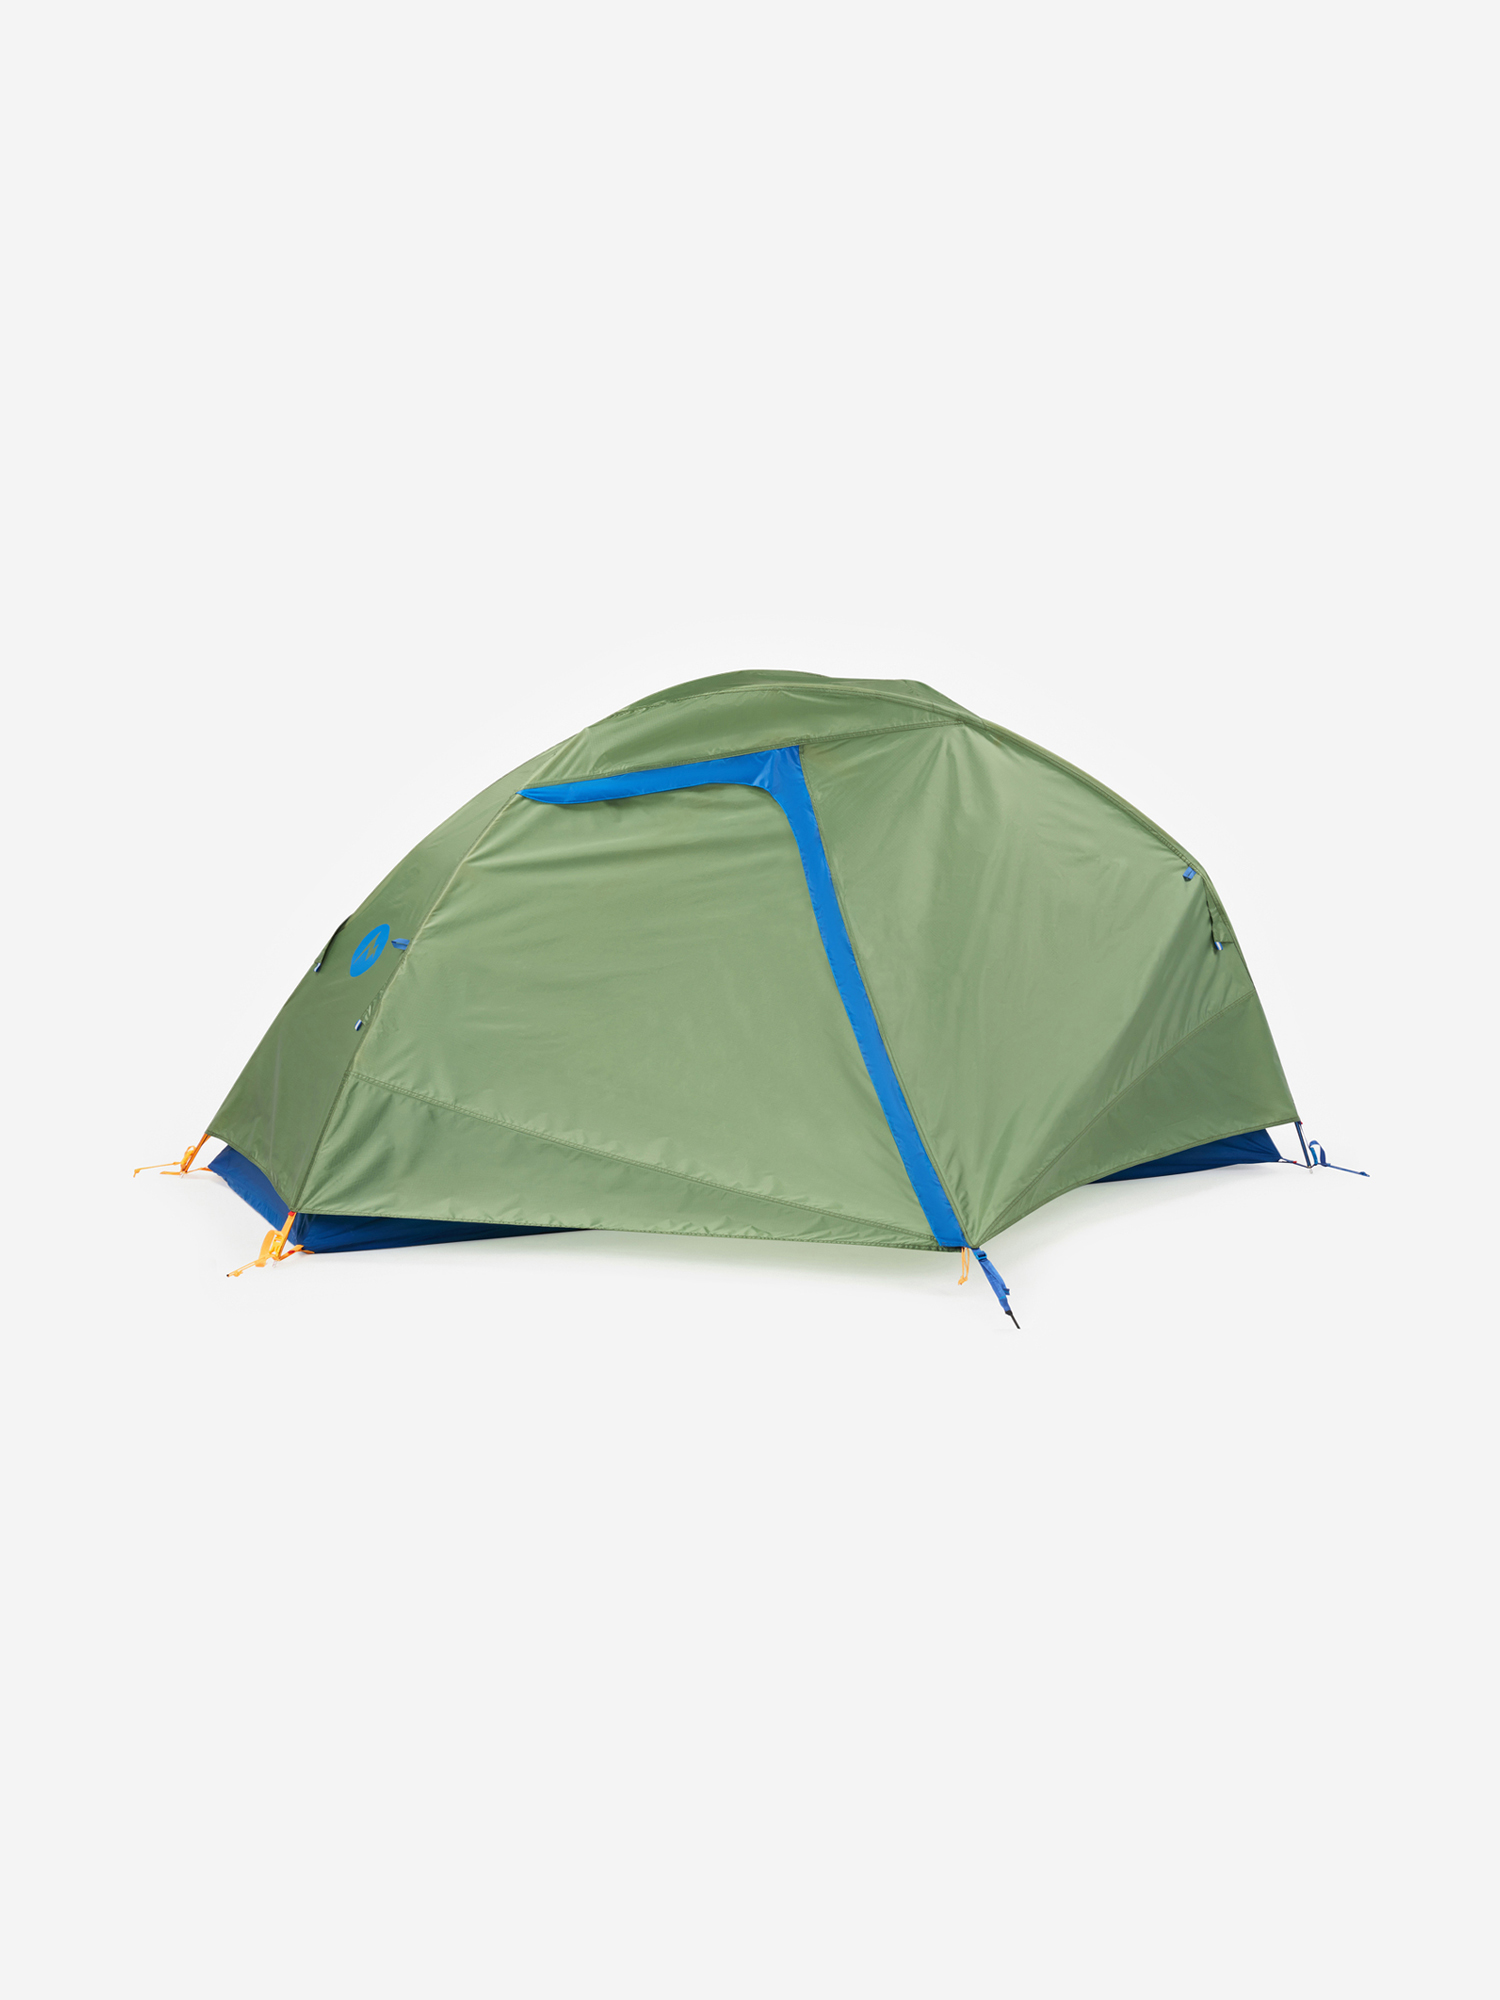 Палатка 1-местная Marmot Tungsten 1P, Зеленый палатка зимняя стэк куб 1 местная трехслойная дышащая